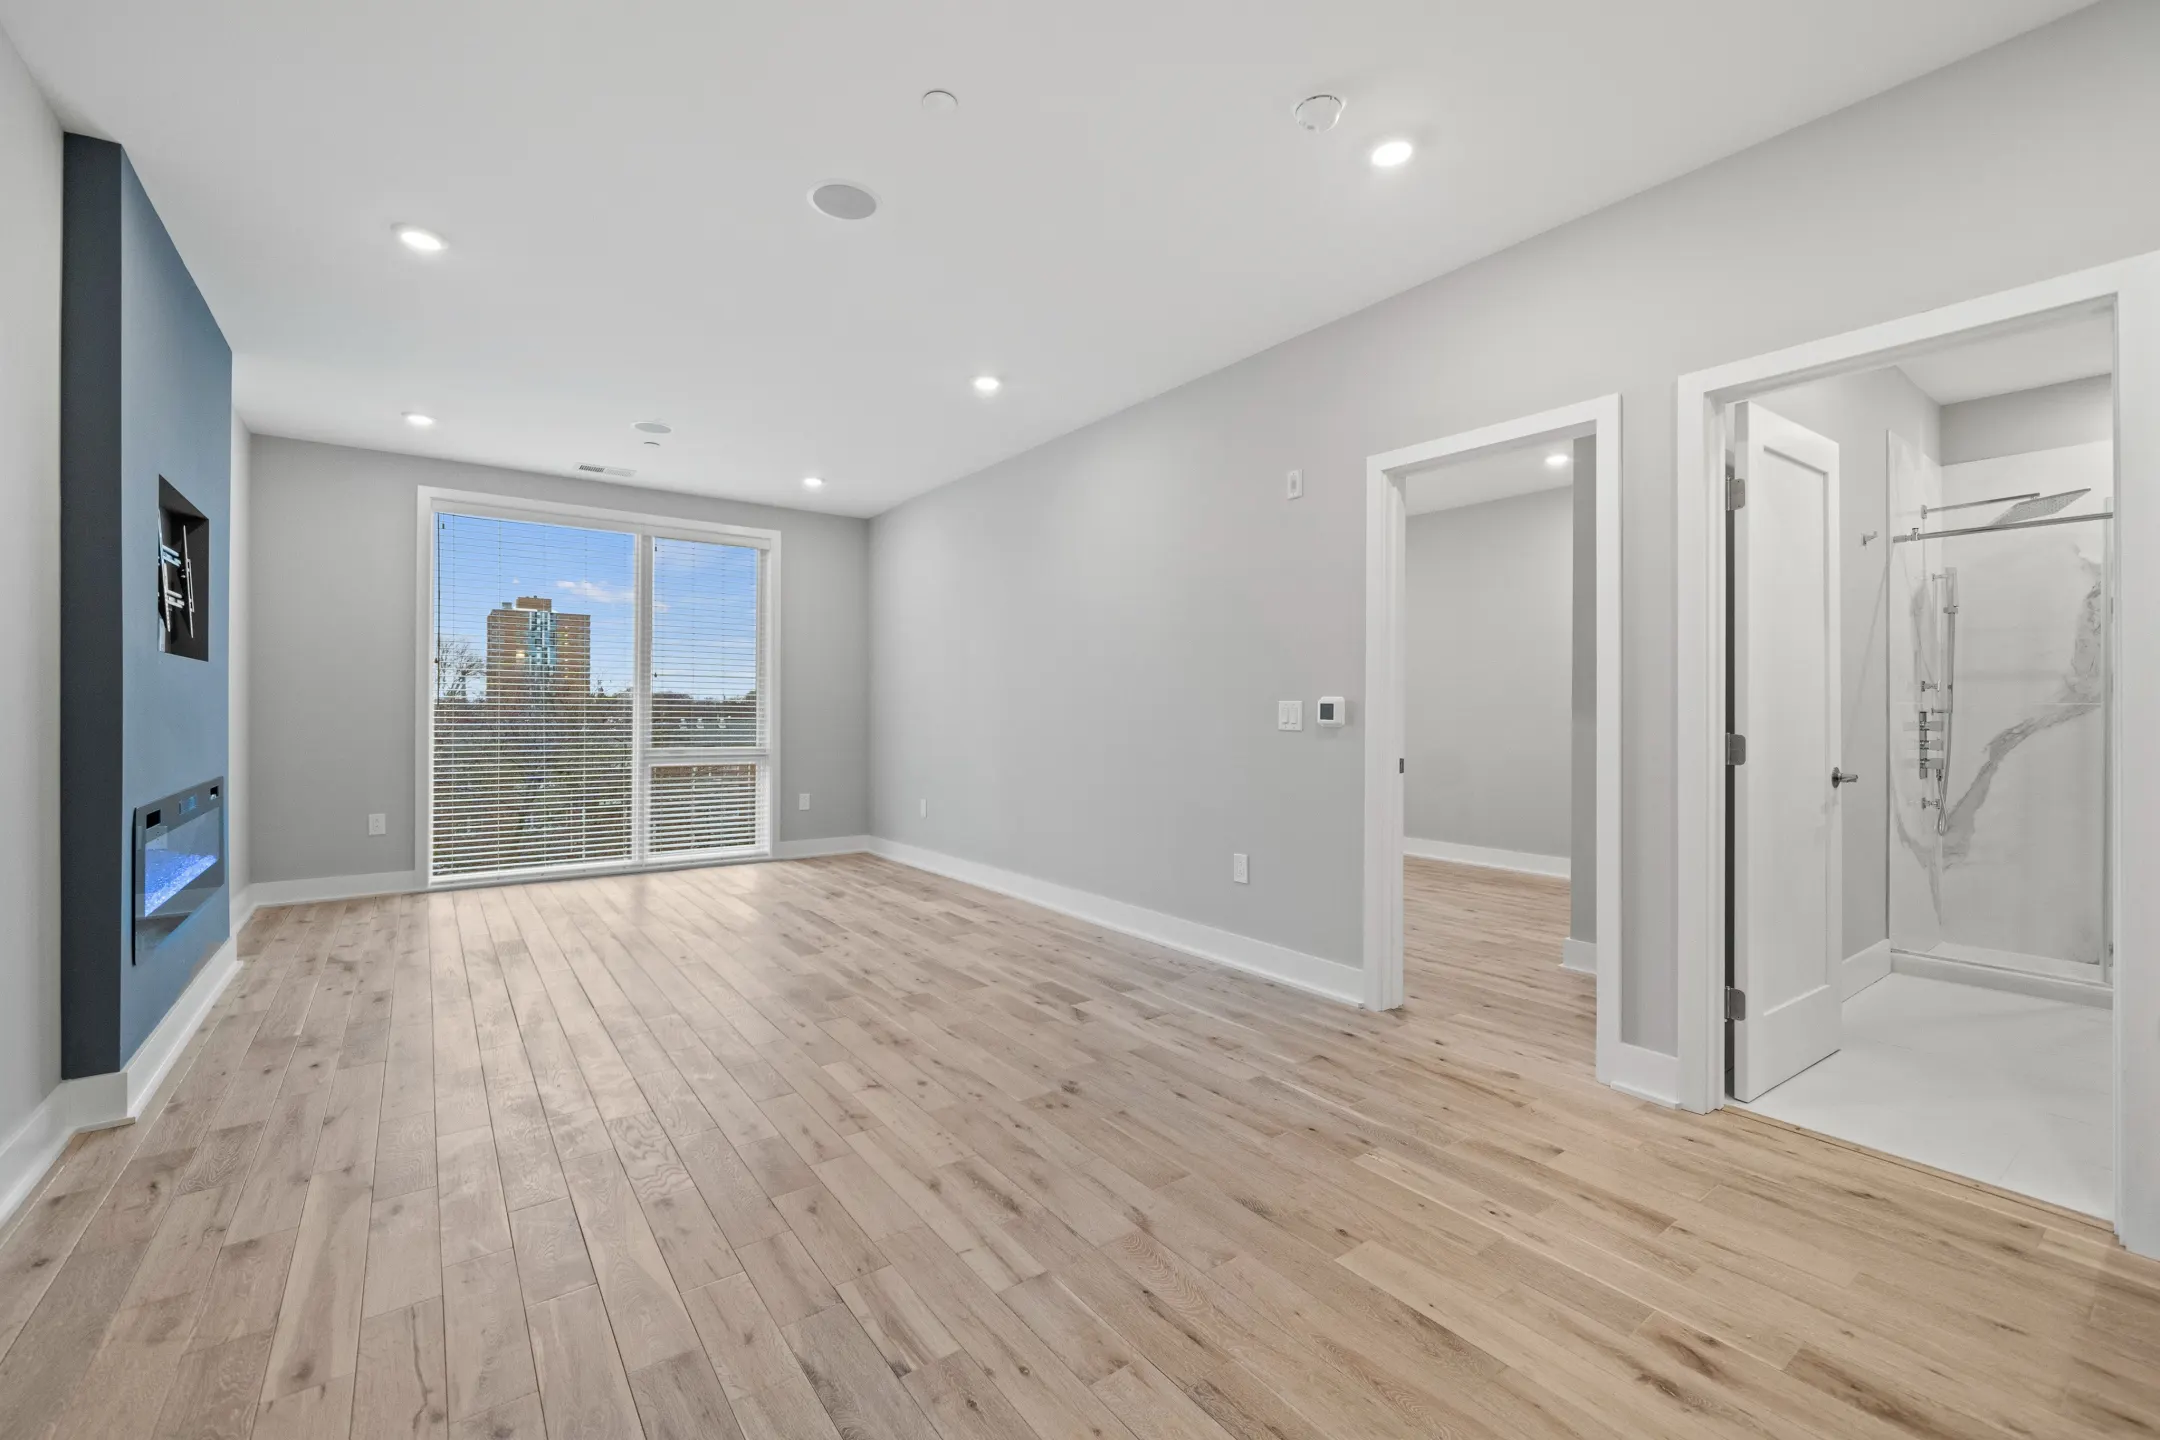 Bedroom - Veranda Apartments - Philadelphia, PA